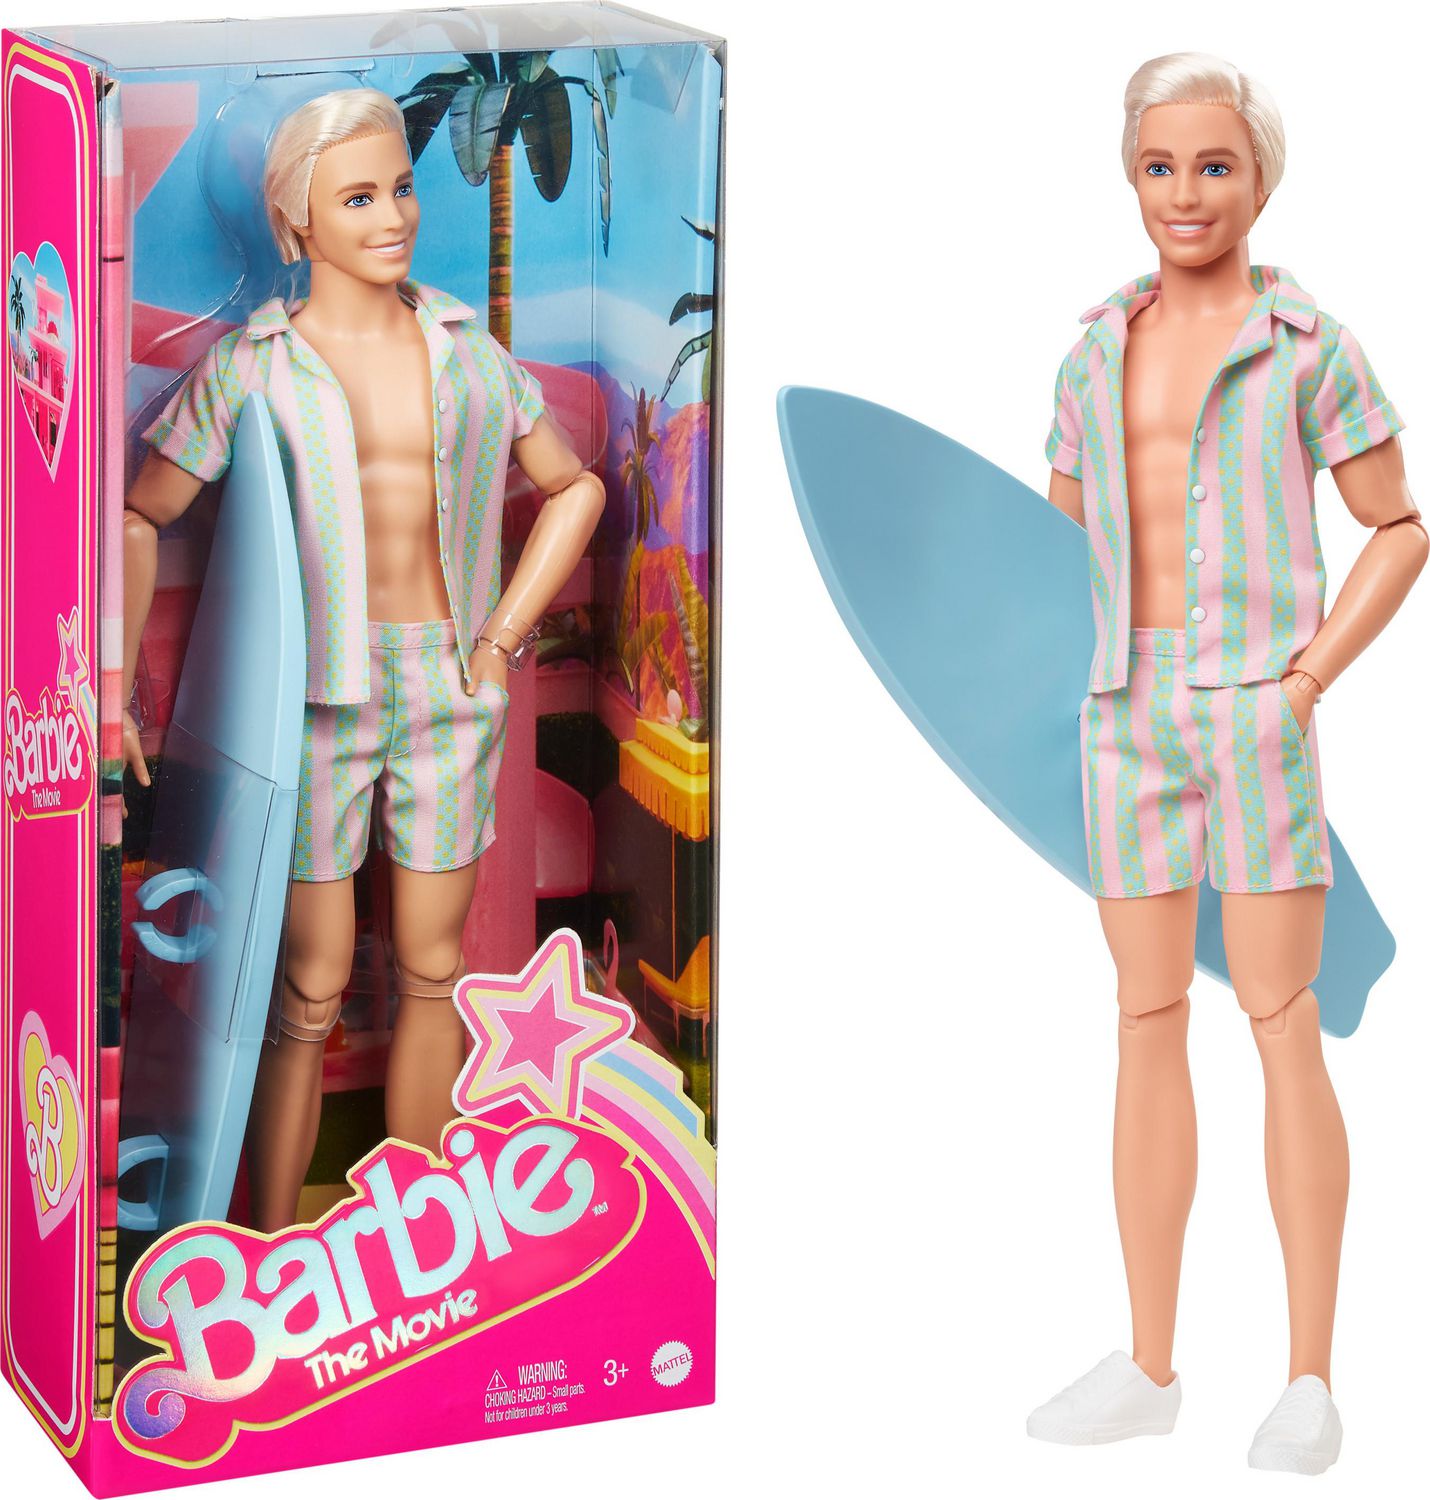 Barbie The Movie Ken Doll Wearing Pastel Striped Beach Matching